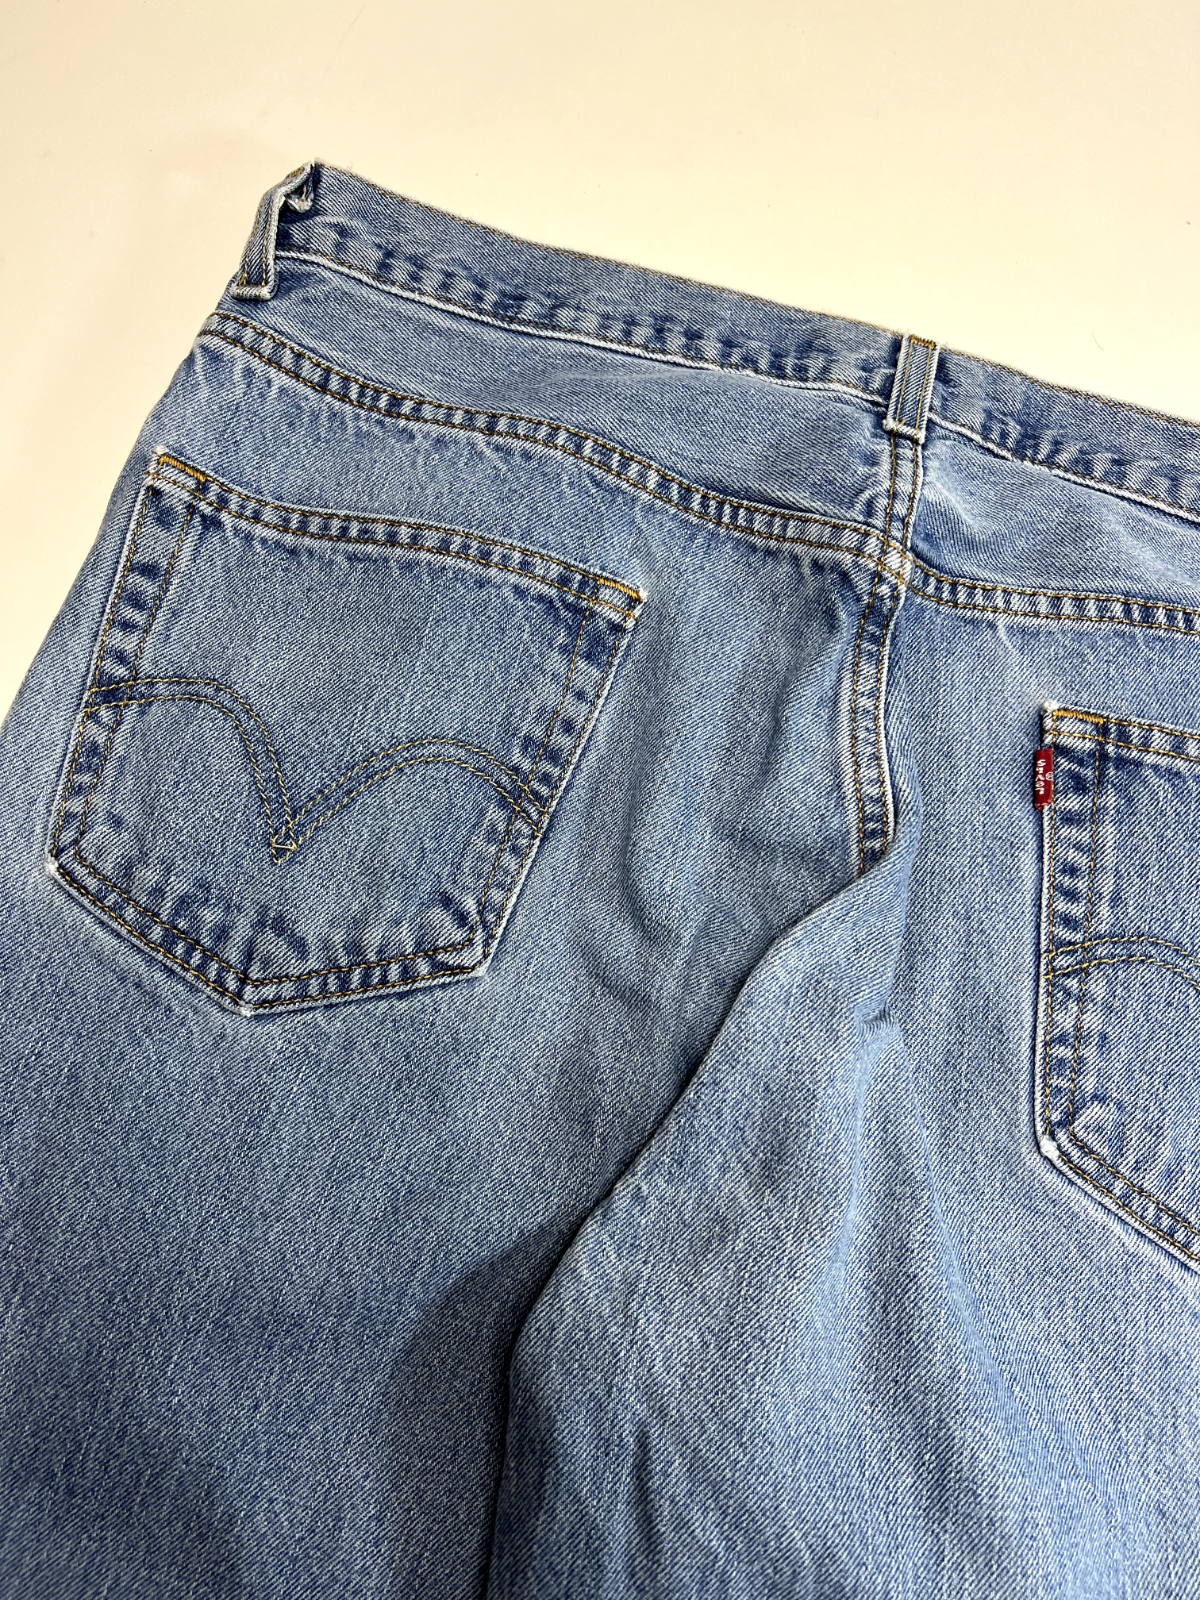 Vintage Levi's 550 Medium Wash Relaxed Fit Denim Pants Size 36W